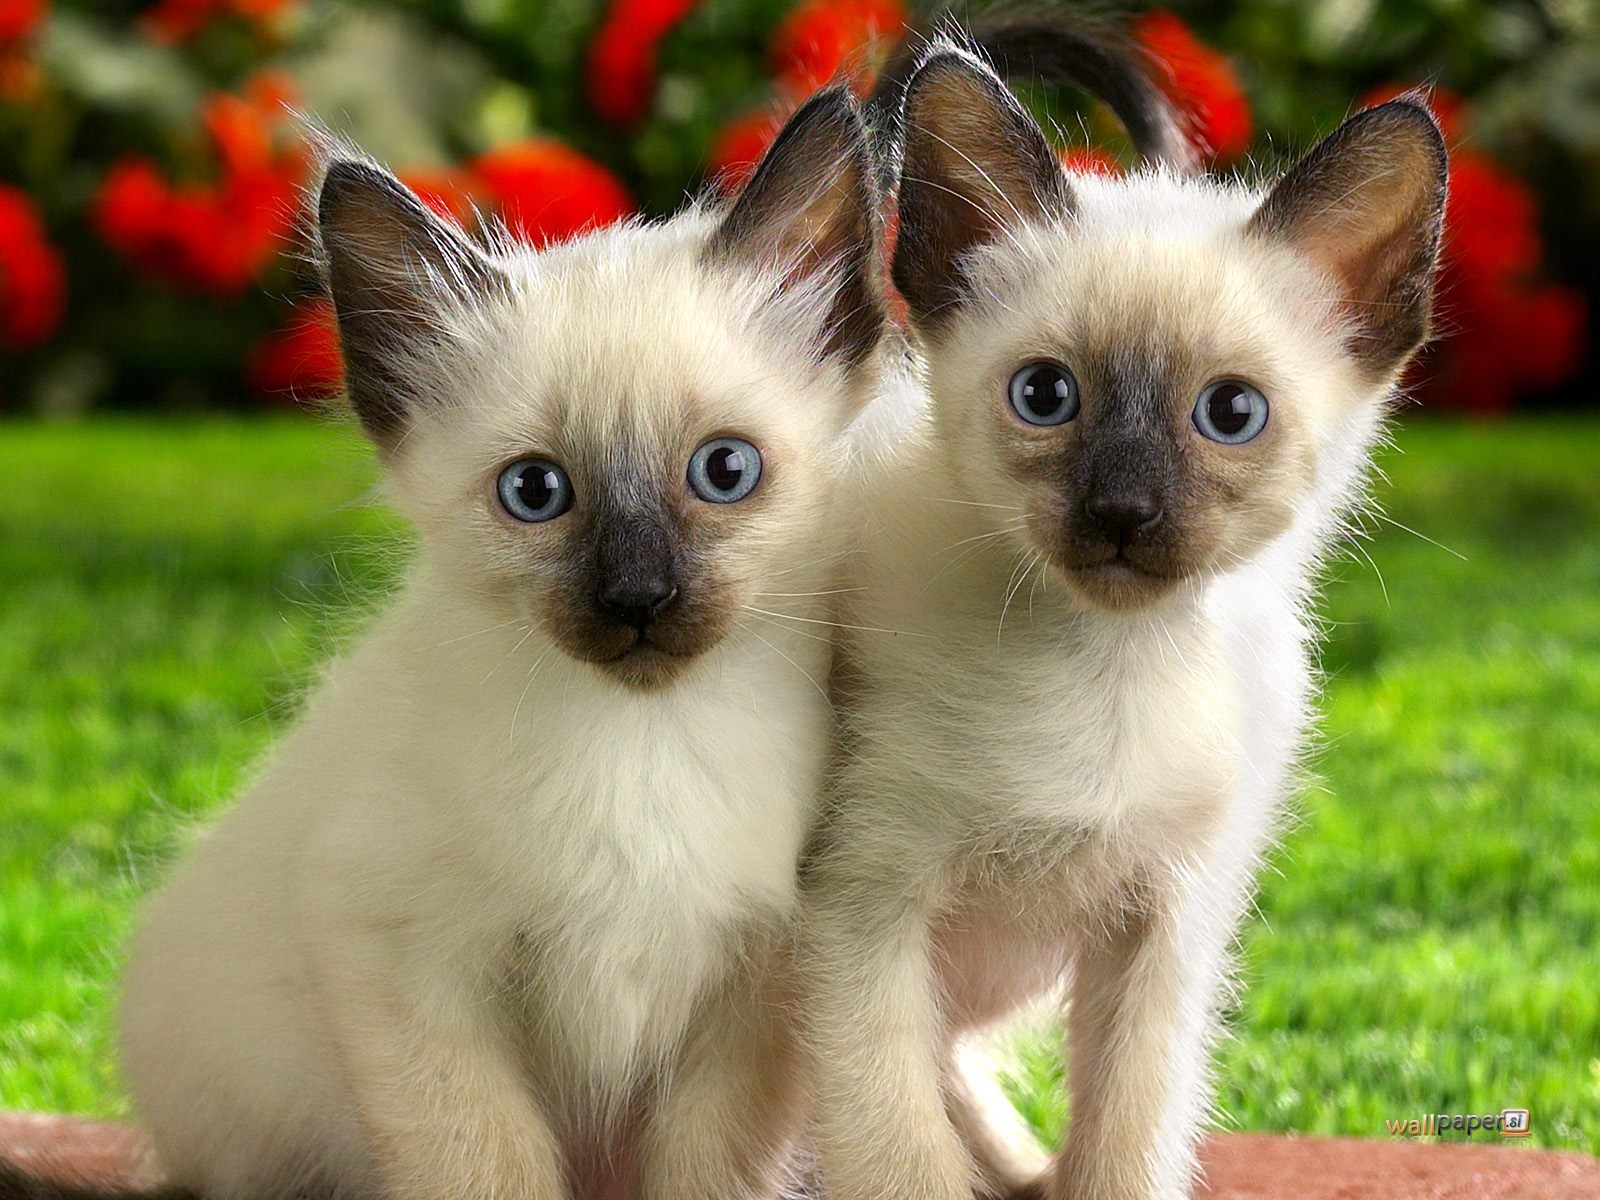 Serrade Petit Kitten: Serrade Siamese Kittens Breed